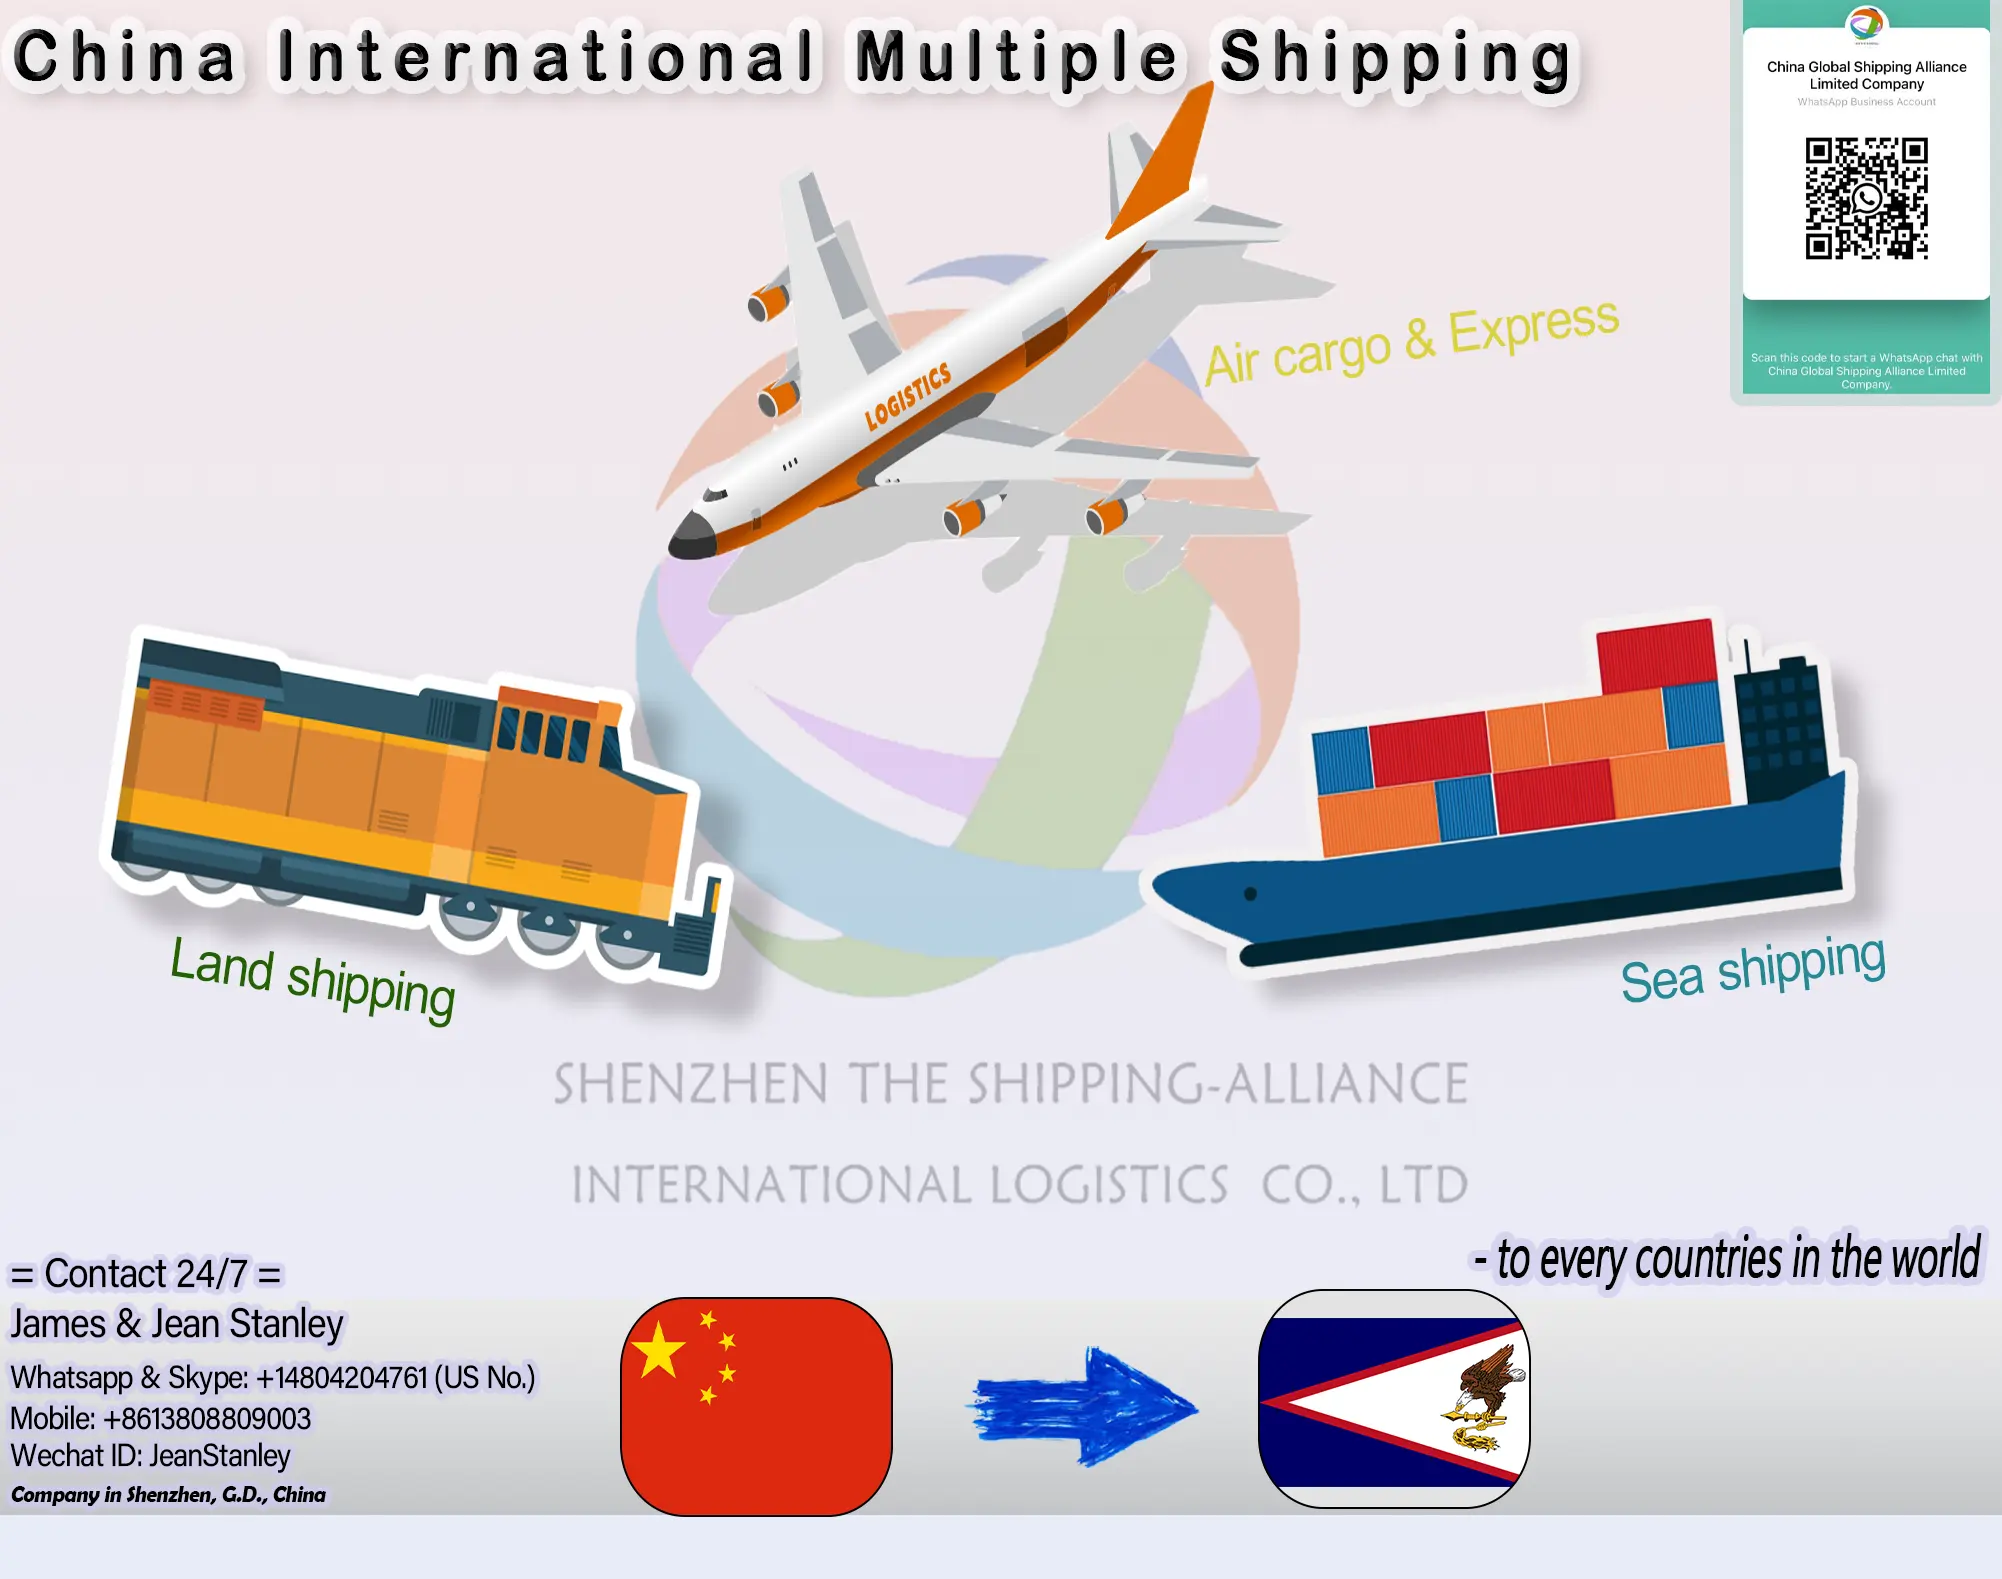 Envío marítimo/aéreo de China a república americana, envío desde Alemania, Aua, Fagatogo, Vailoatai, Malaeimi, Puapua, lauli', fagaalu